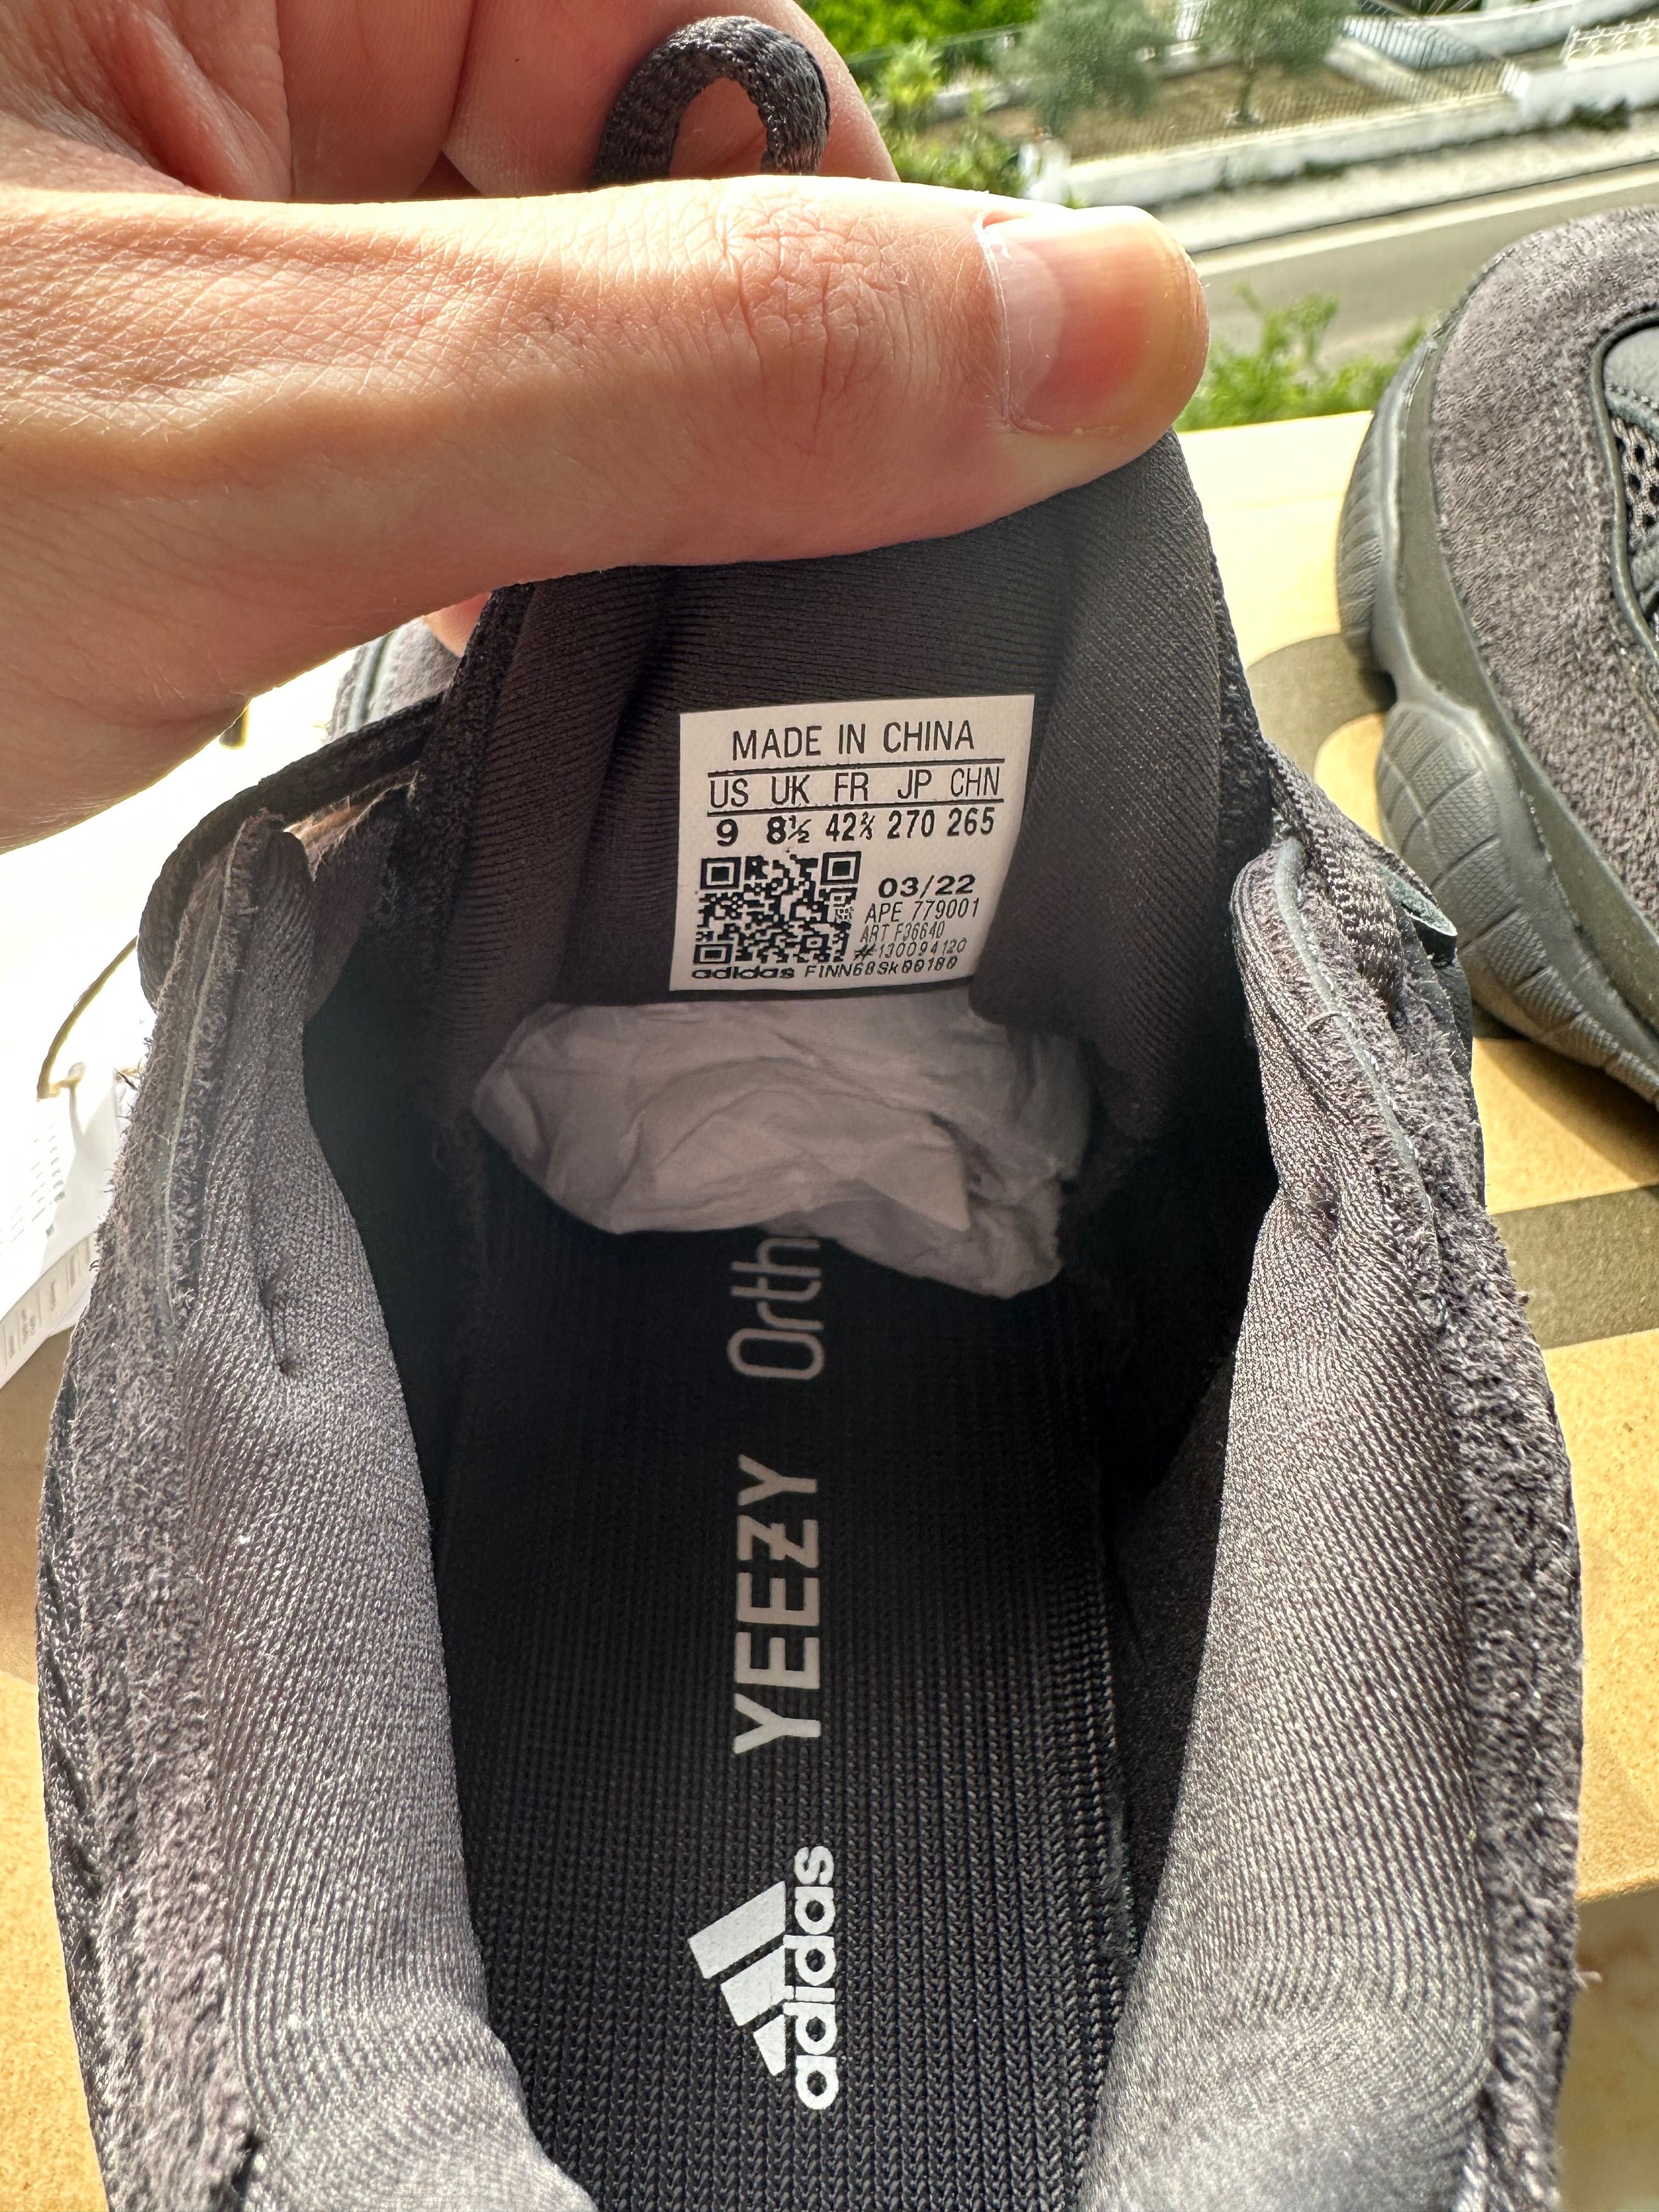 Adidas Yeezy 500 Utility Black 42 2/3 (Nike, Jordan, dunk low)